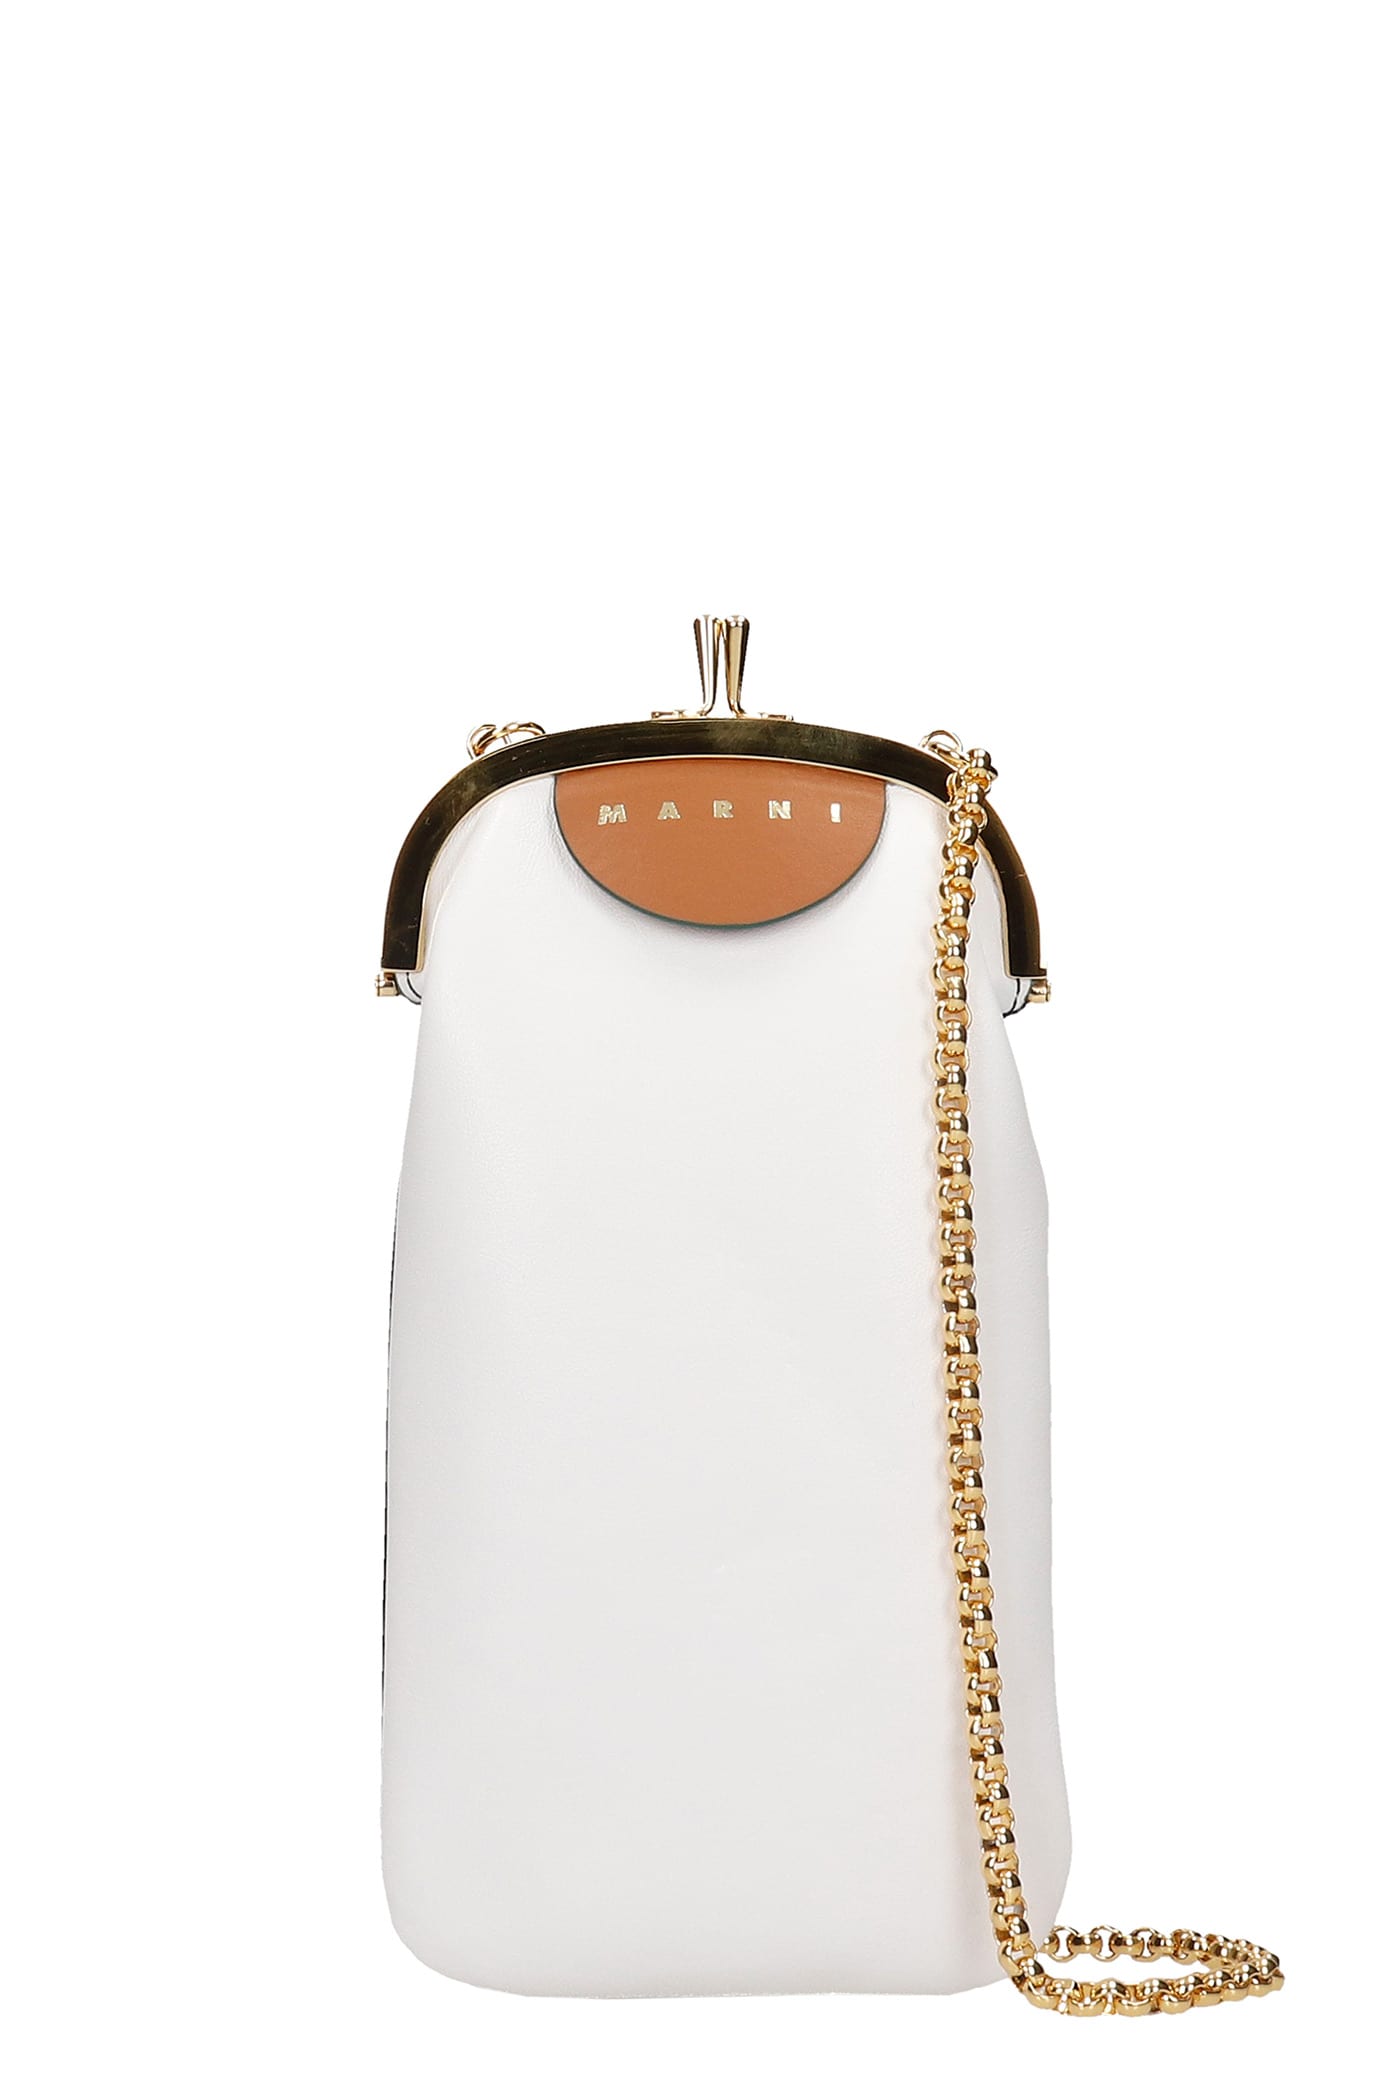 Marni Shoulder Bag In White Leather